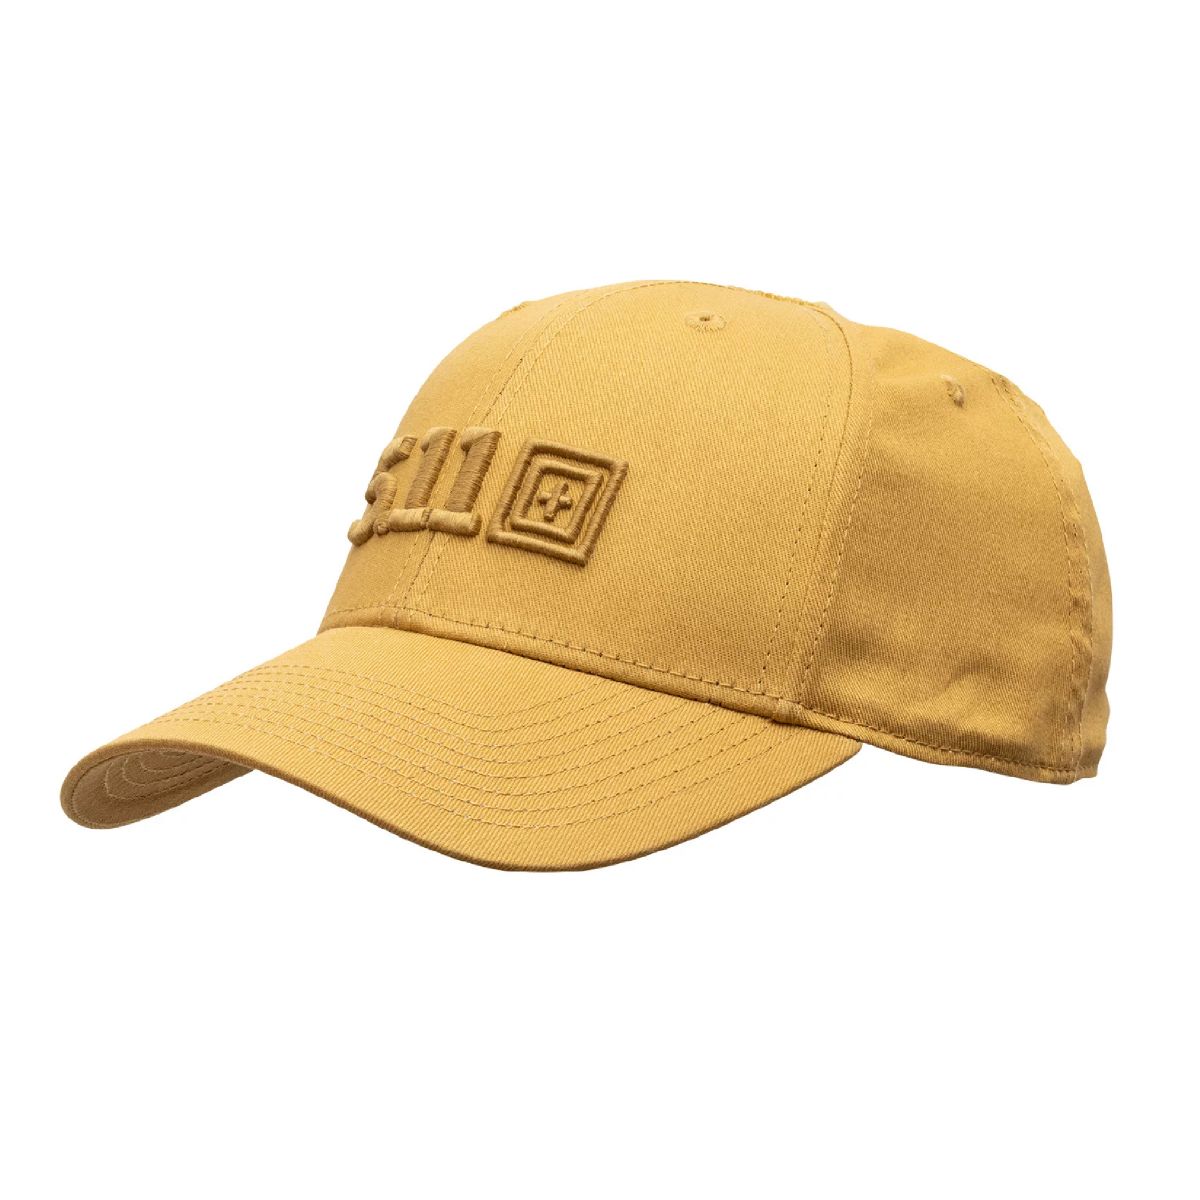 Кепка 5.11 Tactical® Legacy Scout Cap. Колір Жовтий / Old gold